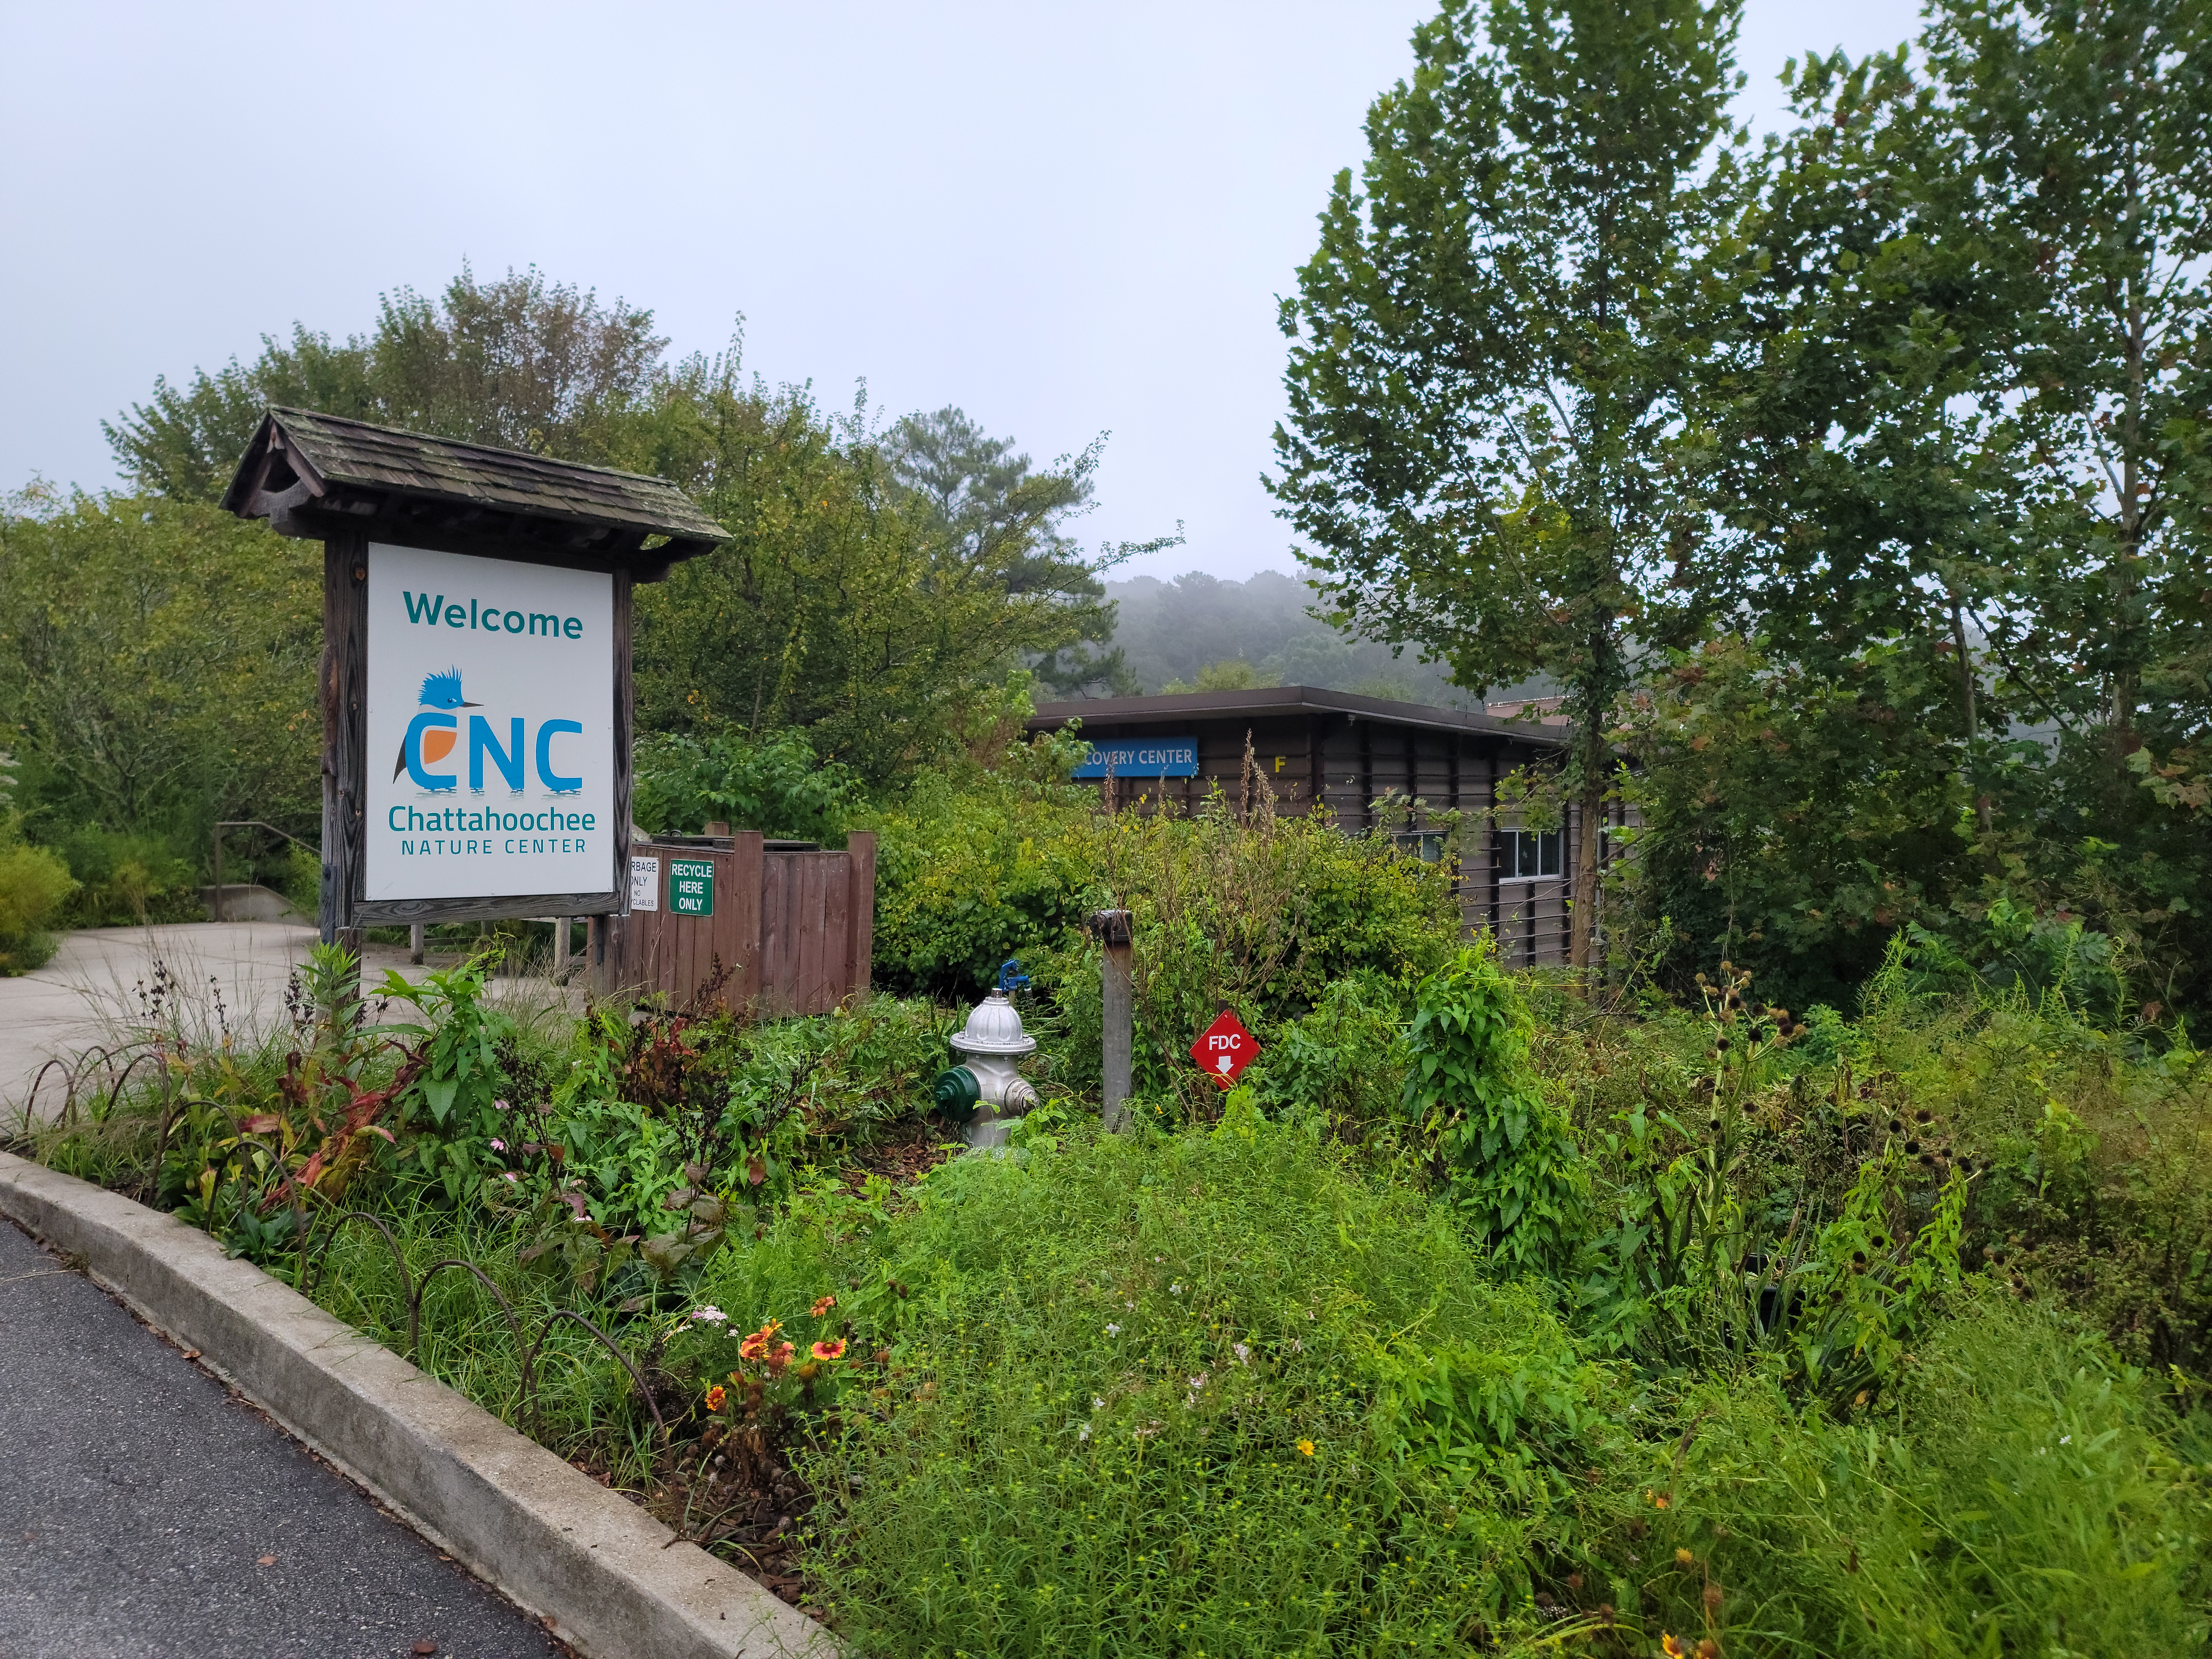 The Chattahoochee Nature Center